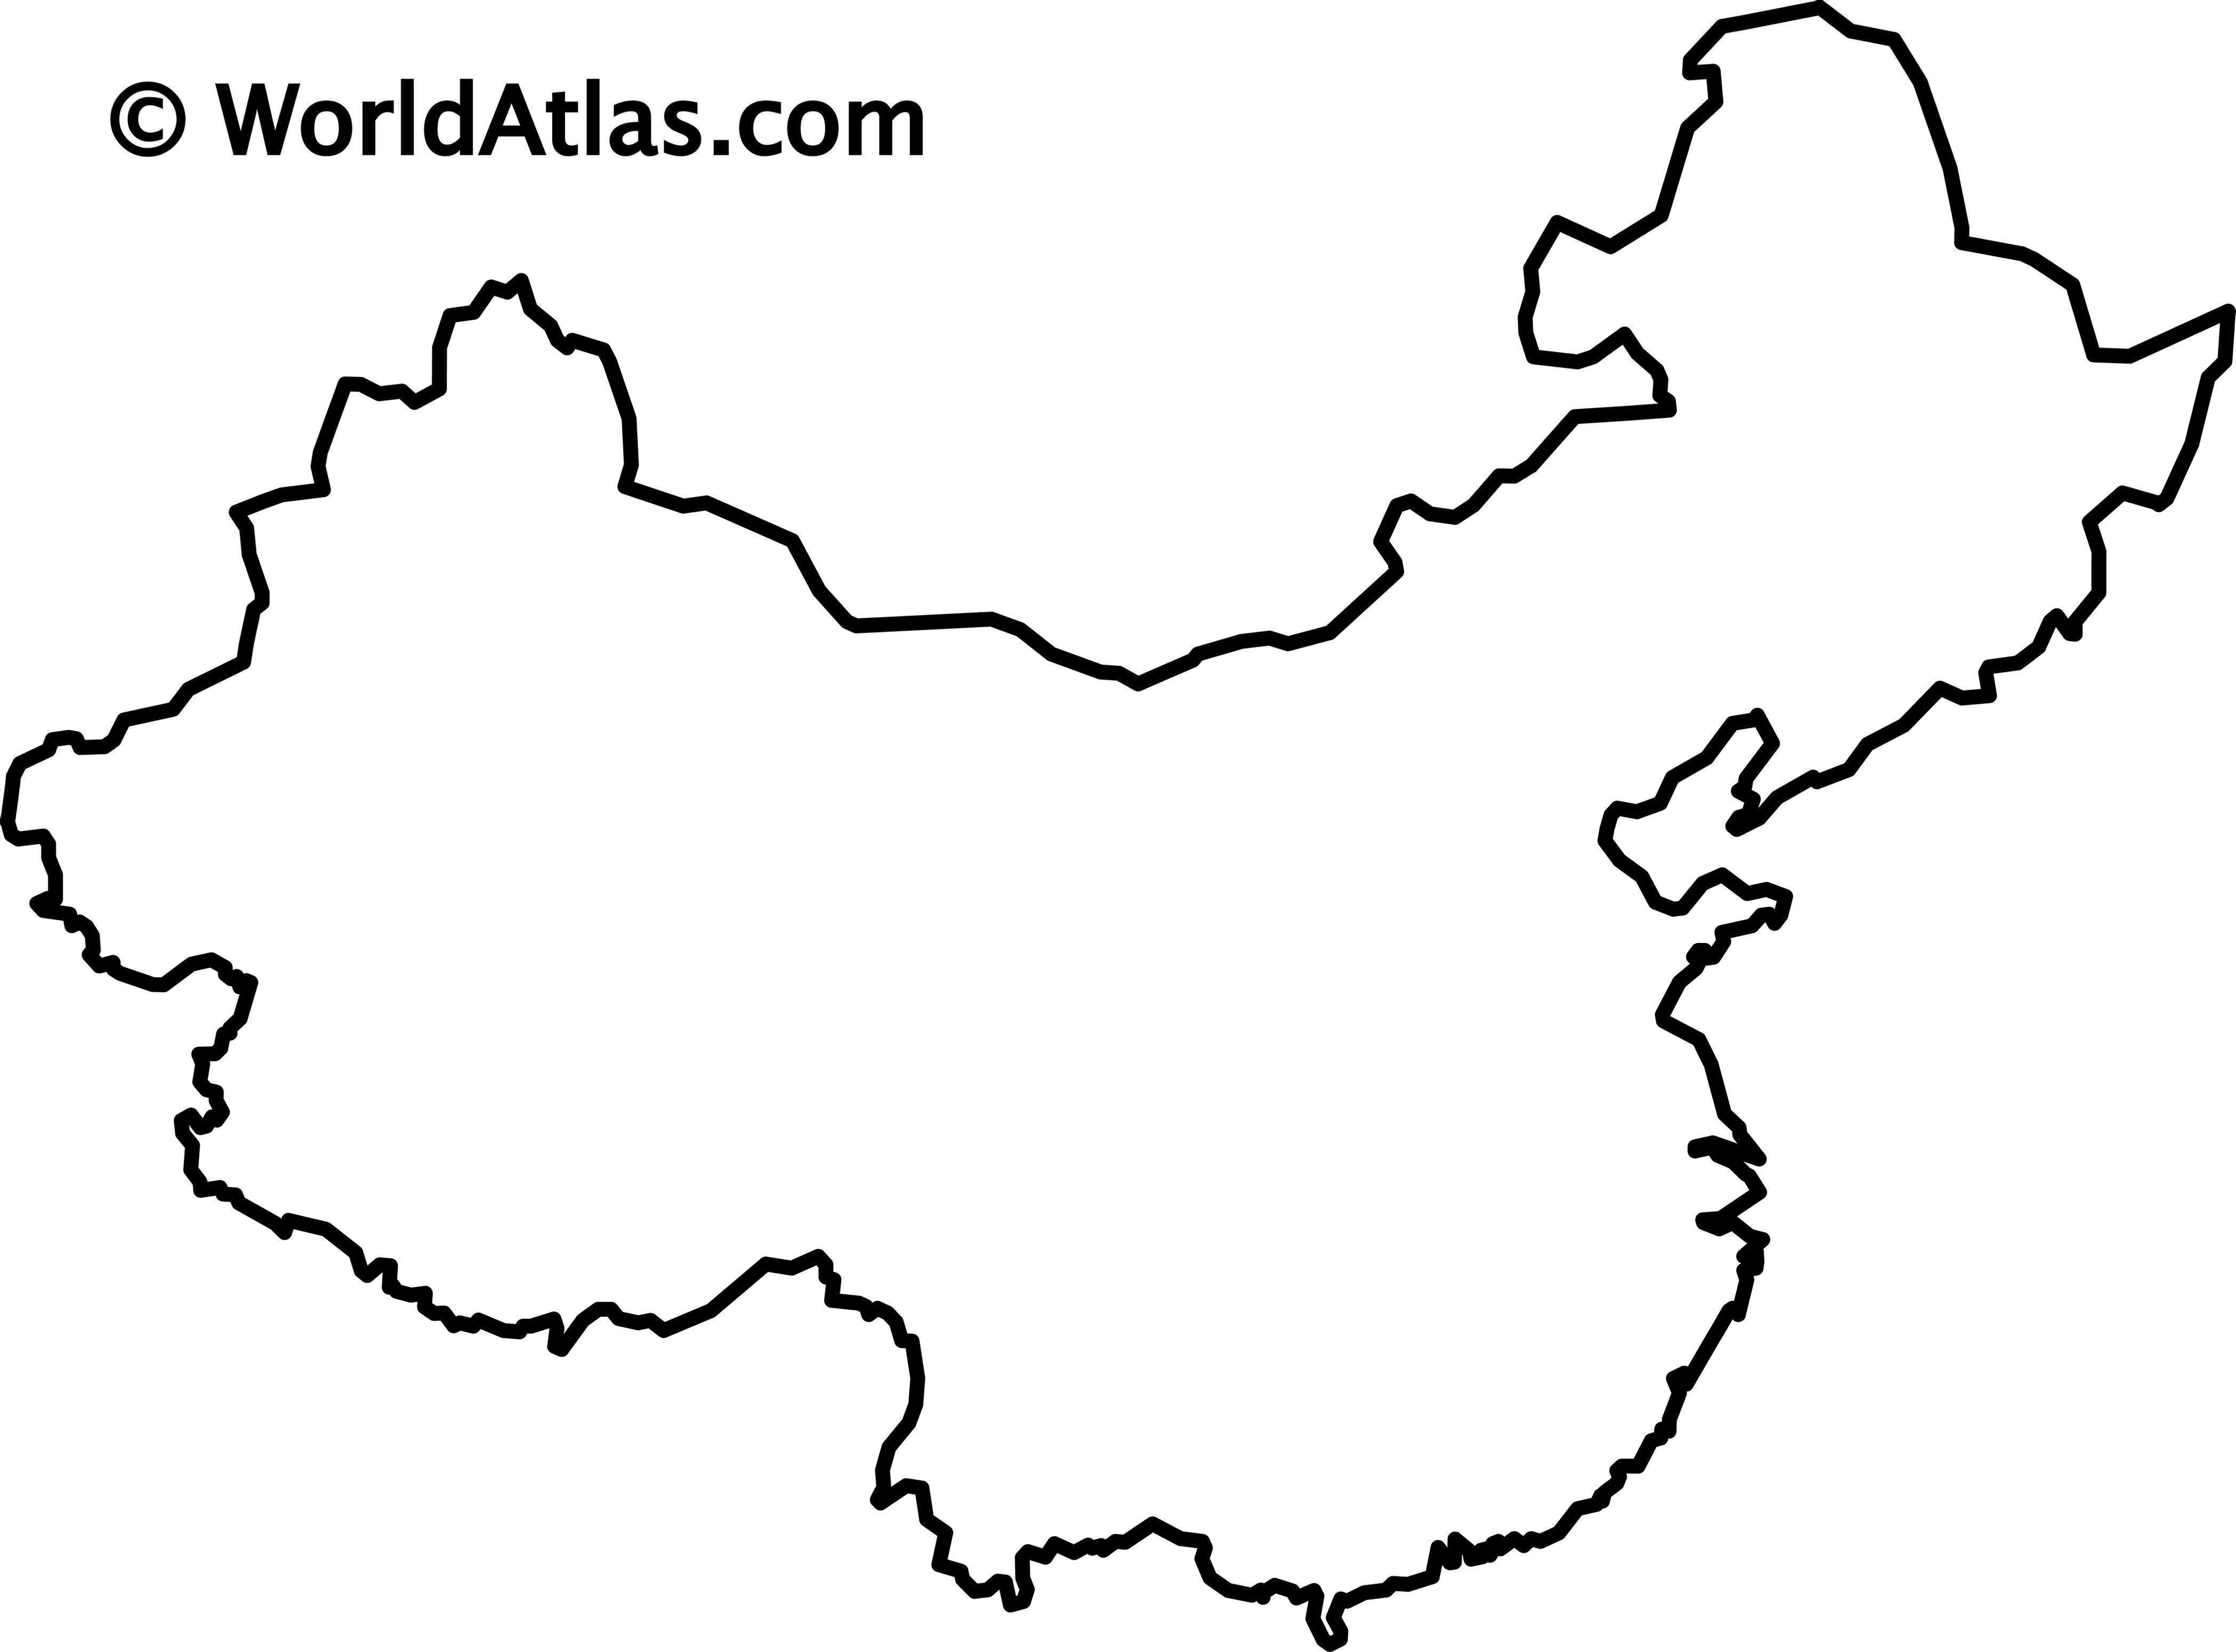 China Maps Facts World Atlas